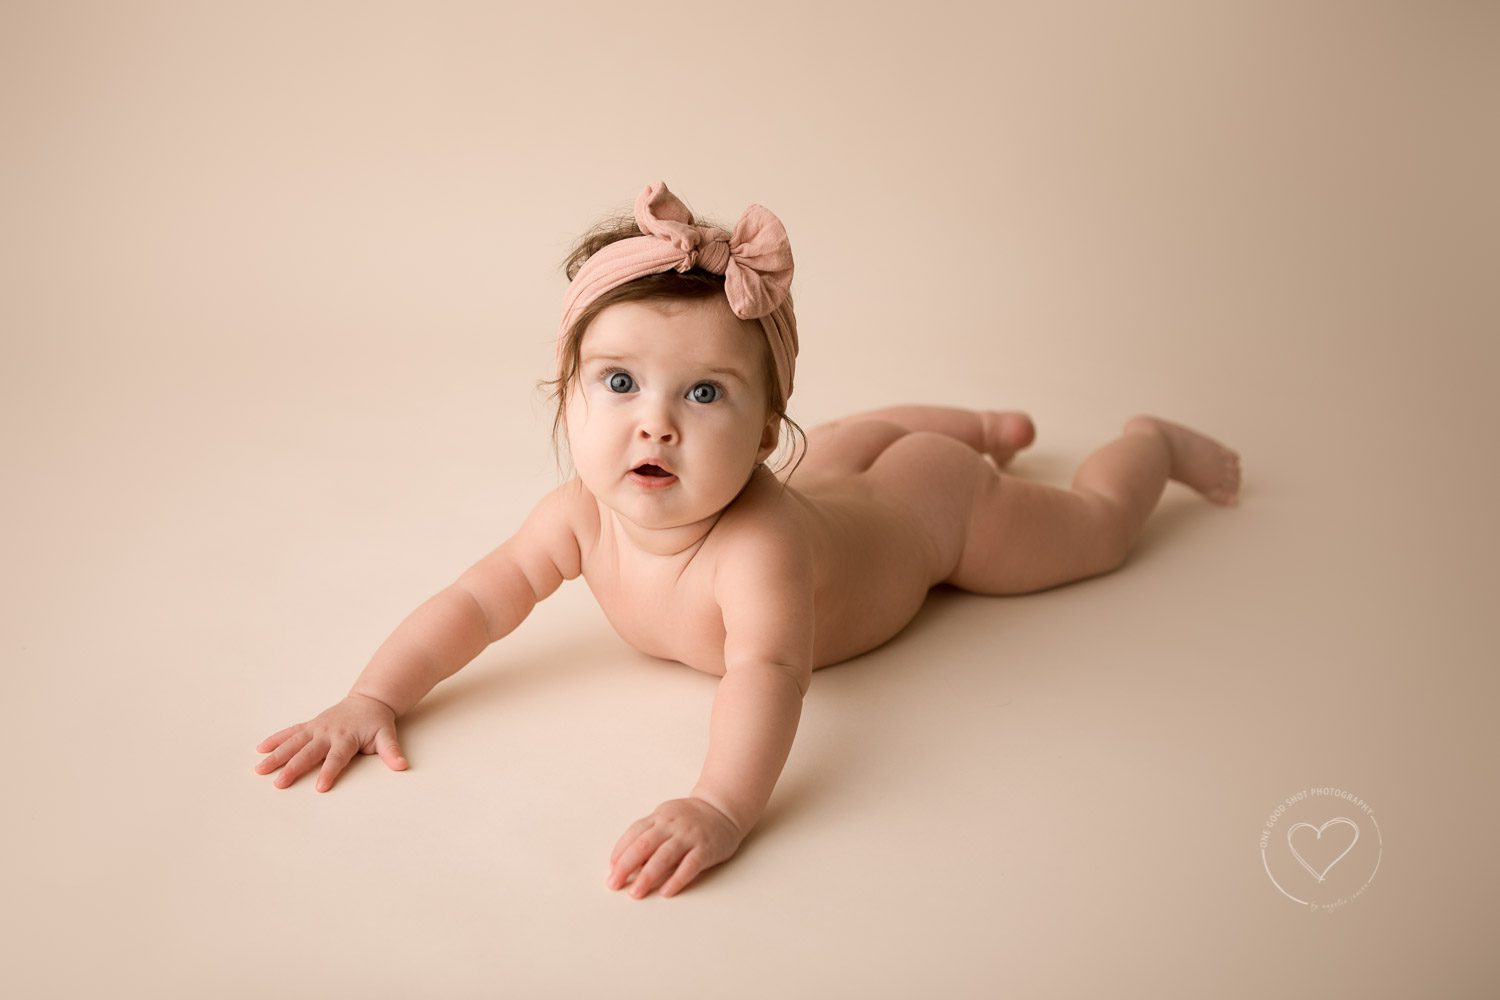 6 month milestone photos, studio photography, baby girl, tummy pose, pink bow